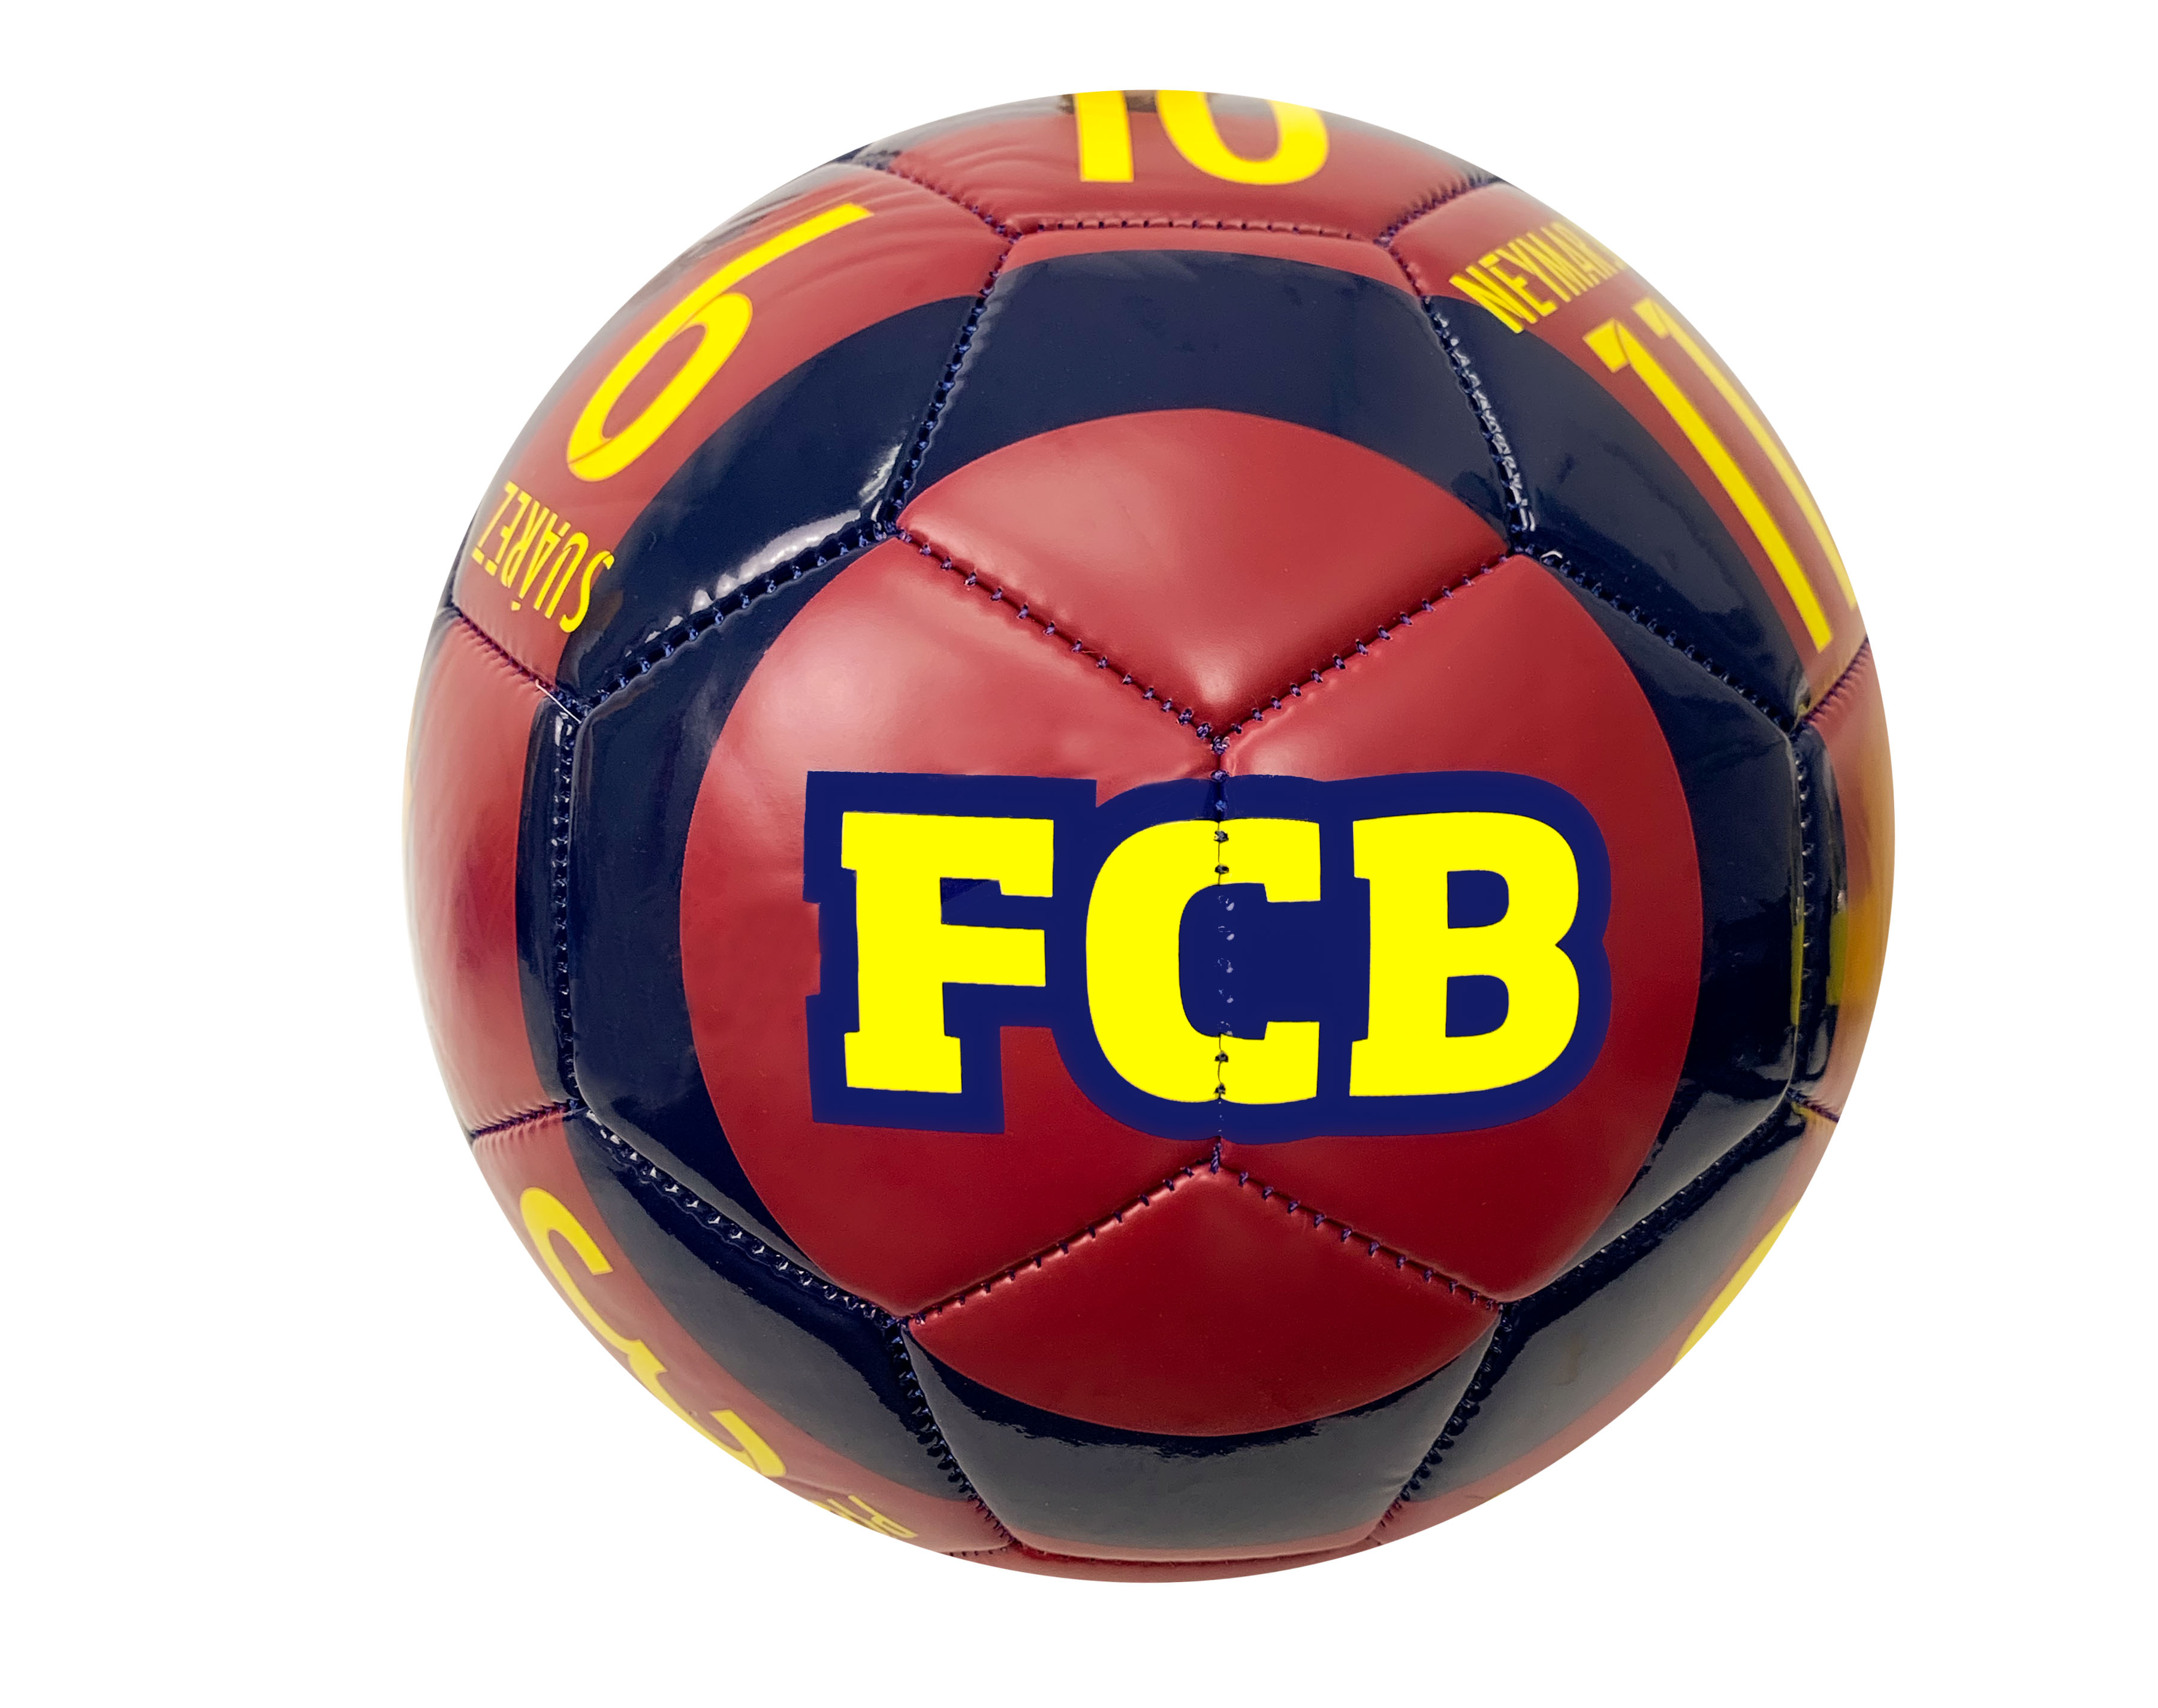 Barcelona Soccer ball (Size 5), FC Barcelona Players Ball Name & Number #5 - image 2 of 5